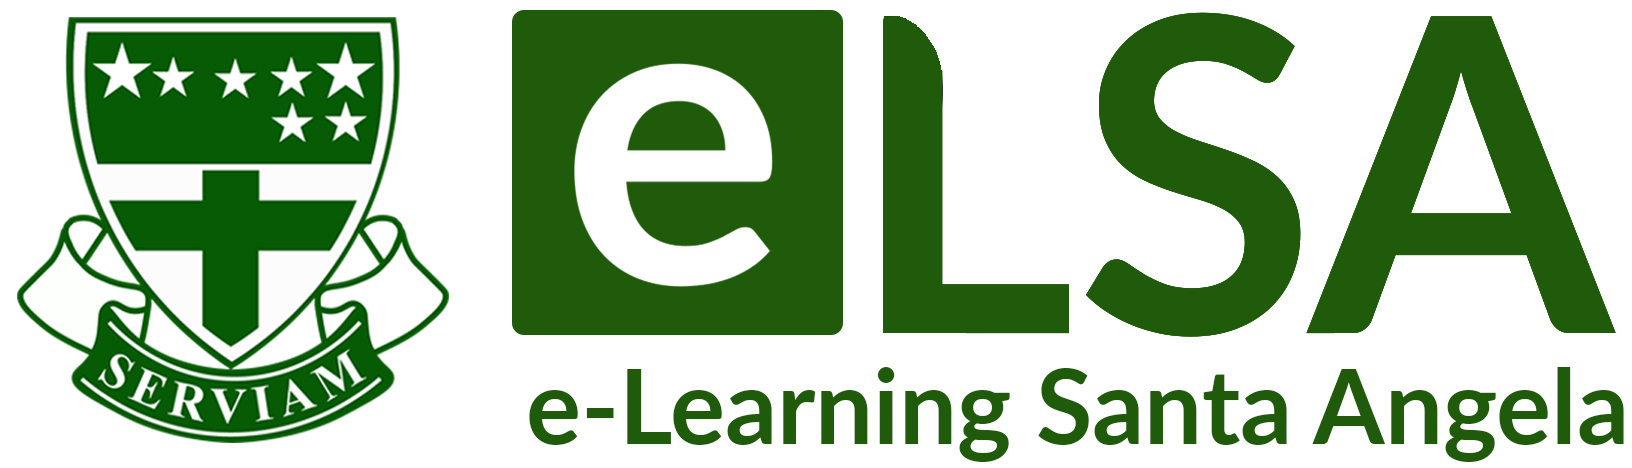 ELSA - Learning Portal